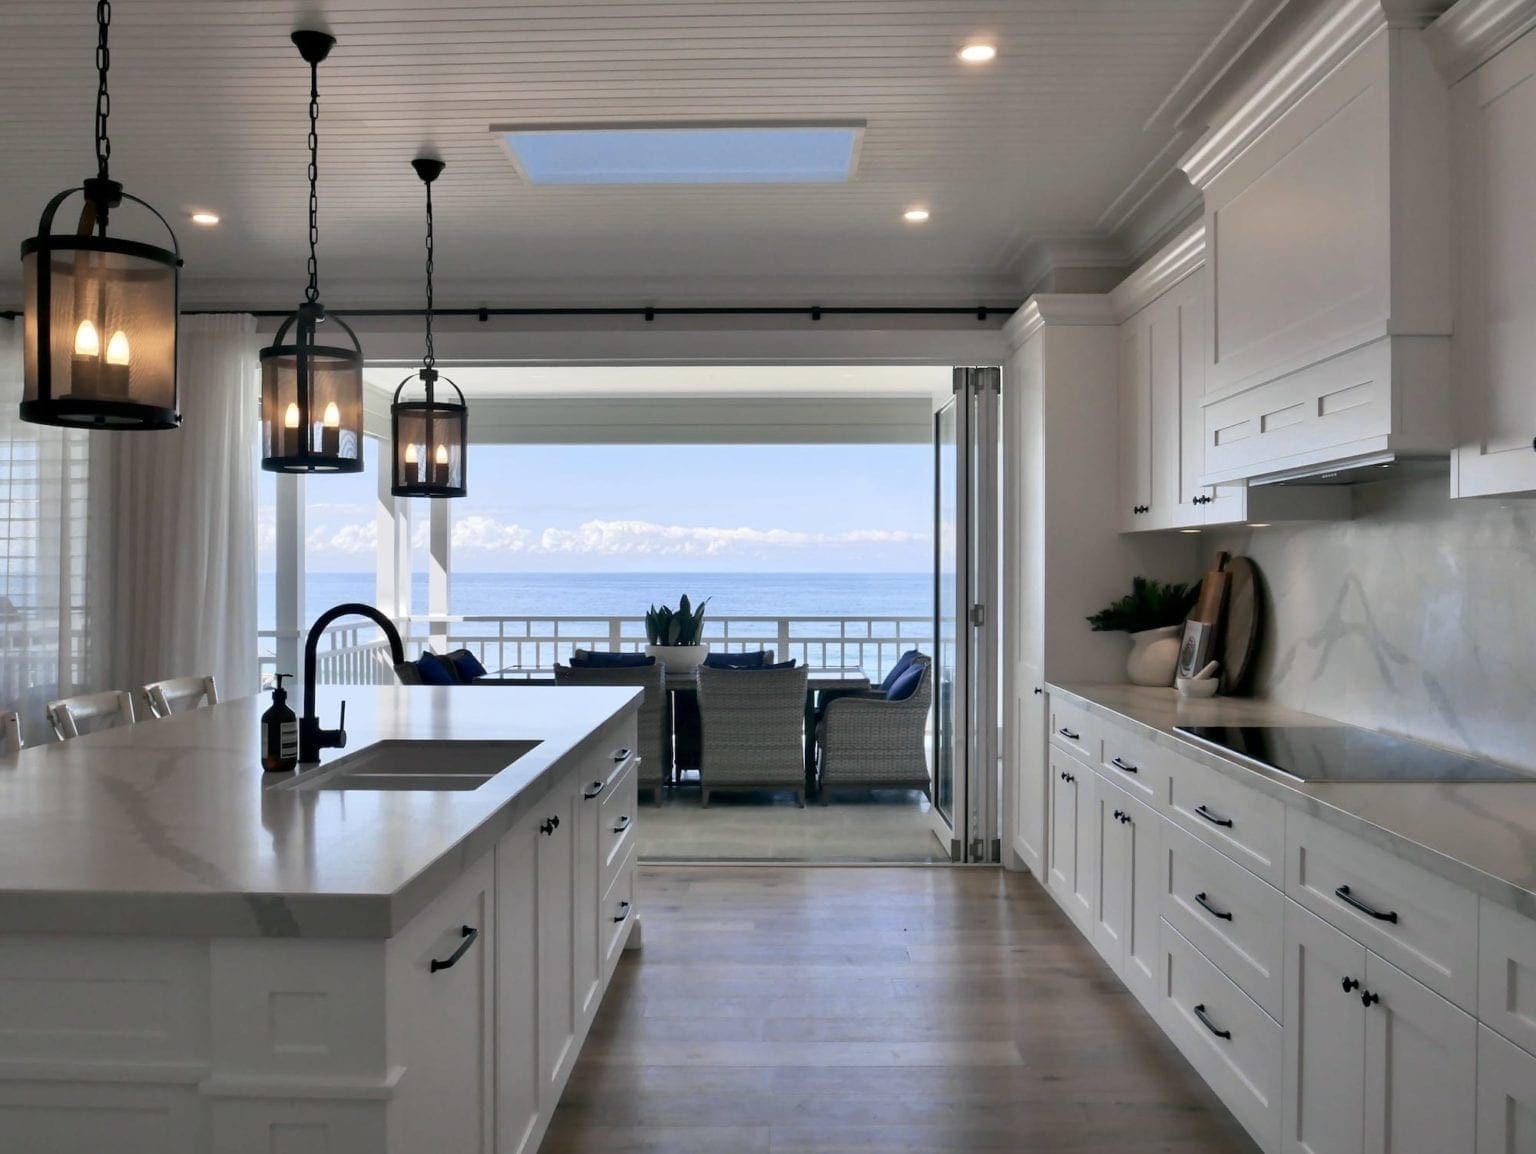 Ocean Glamour Kitchen Wombarra View 1536x1154 